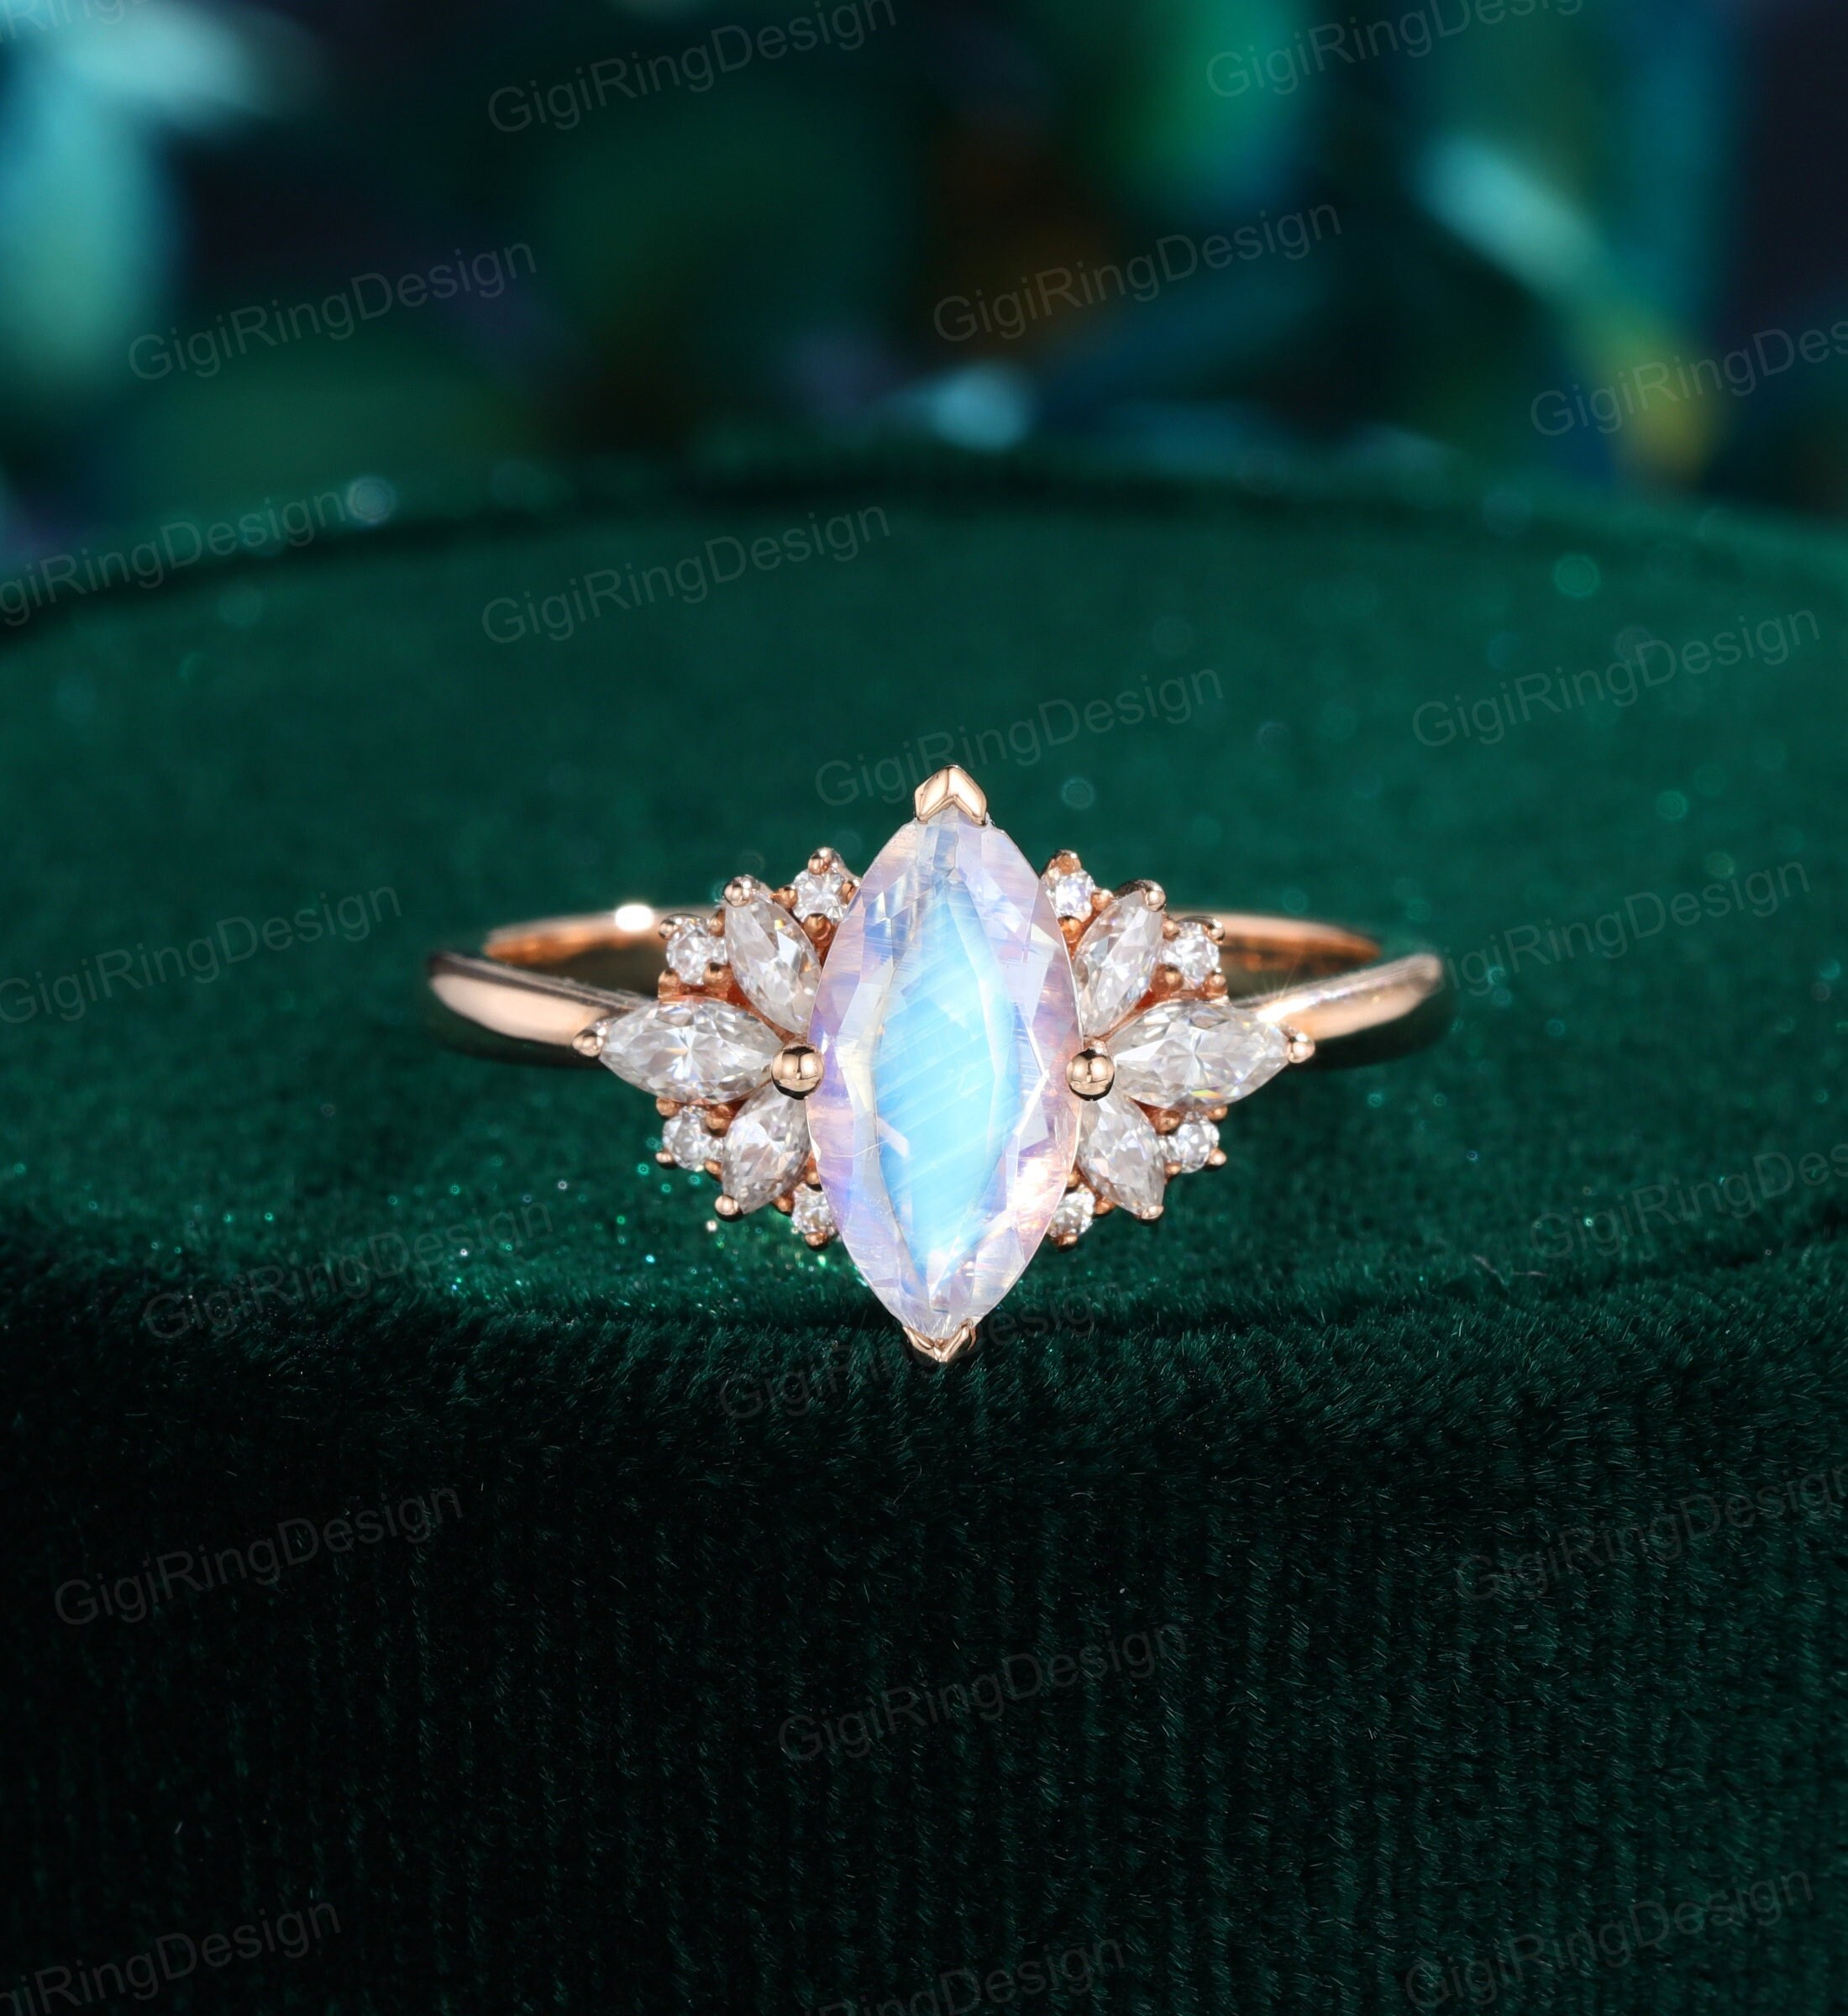 Pmmqrrkuu Women Moonstone and Diamond Ring Wedding Anniversary Ring for Wife Engagement Jewelry Stylish Rings Size 9 